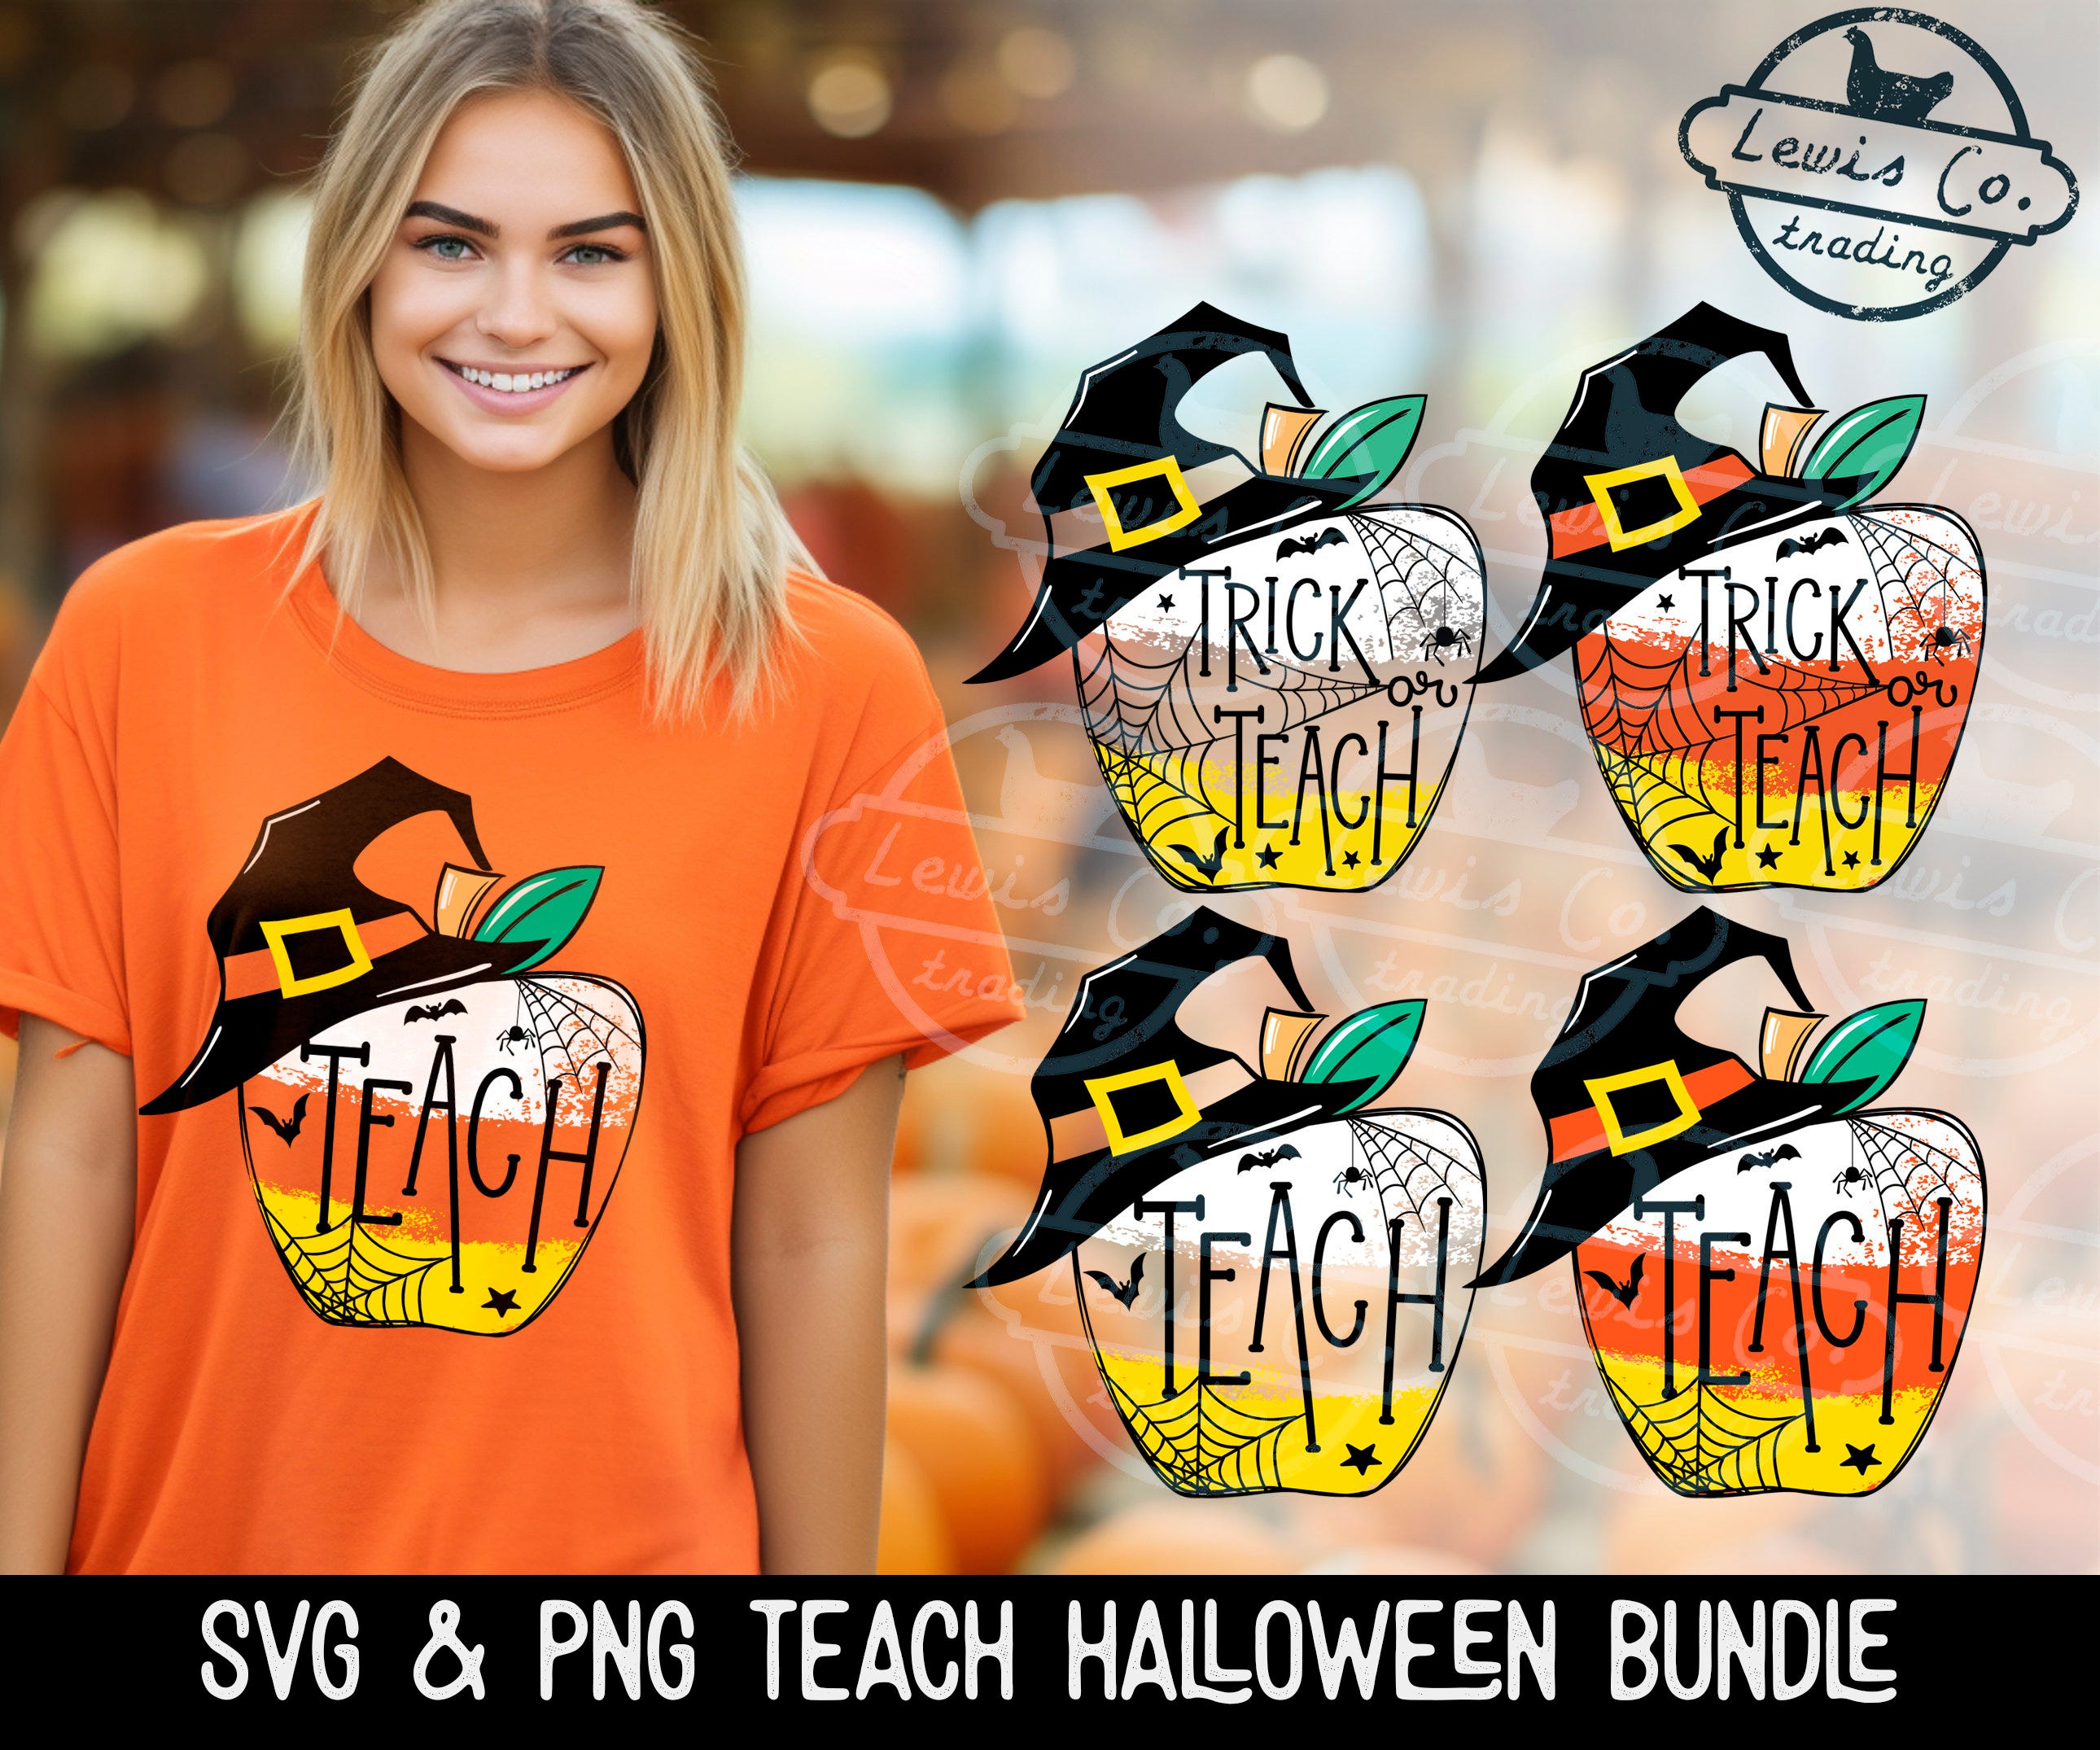 Teacher Halloween SVG & PNG Bundle | Trick or Teach Digital Download | Candy Corn Apple T-shirt Design | Classroom Printable